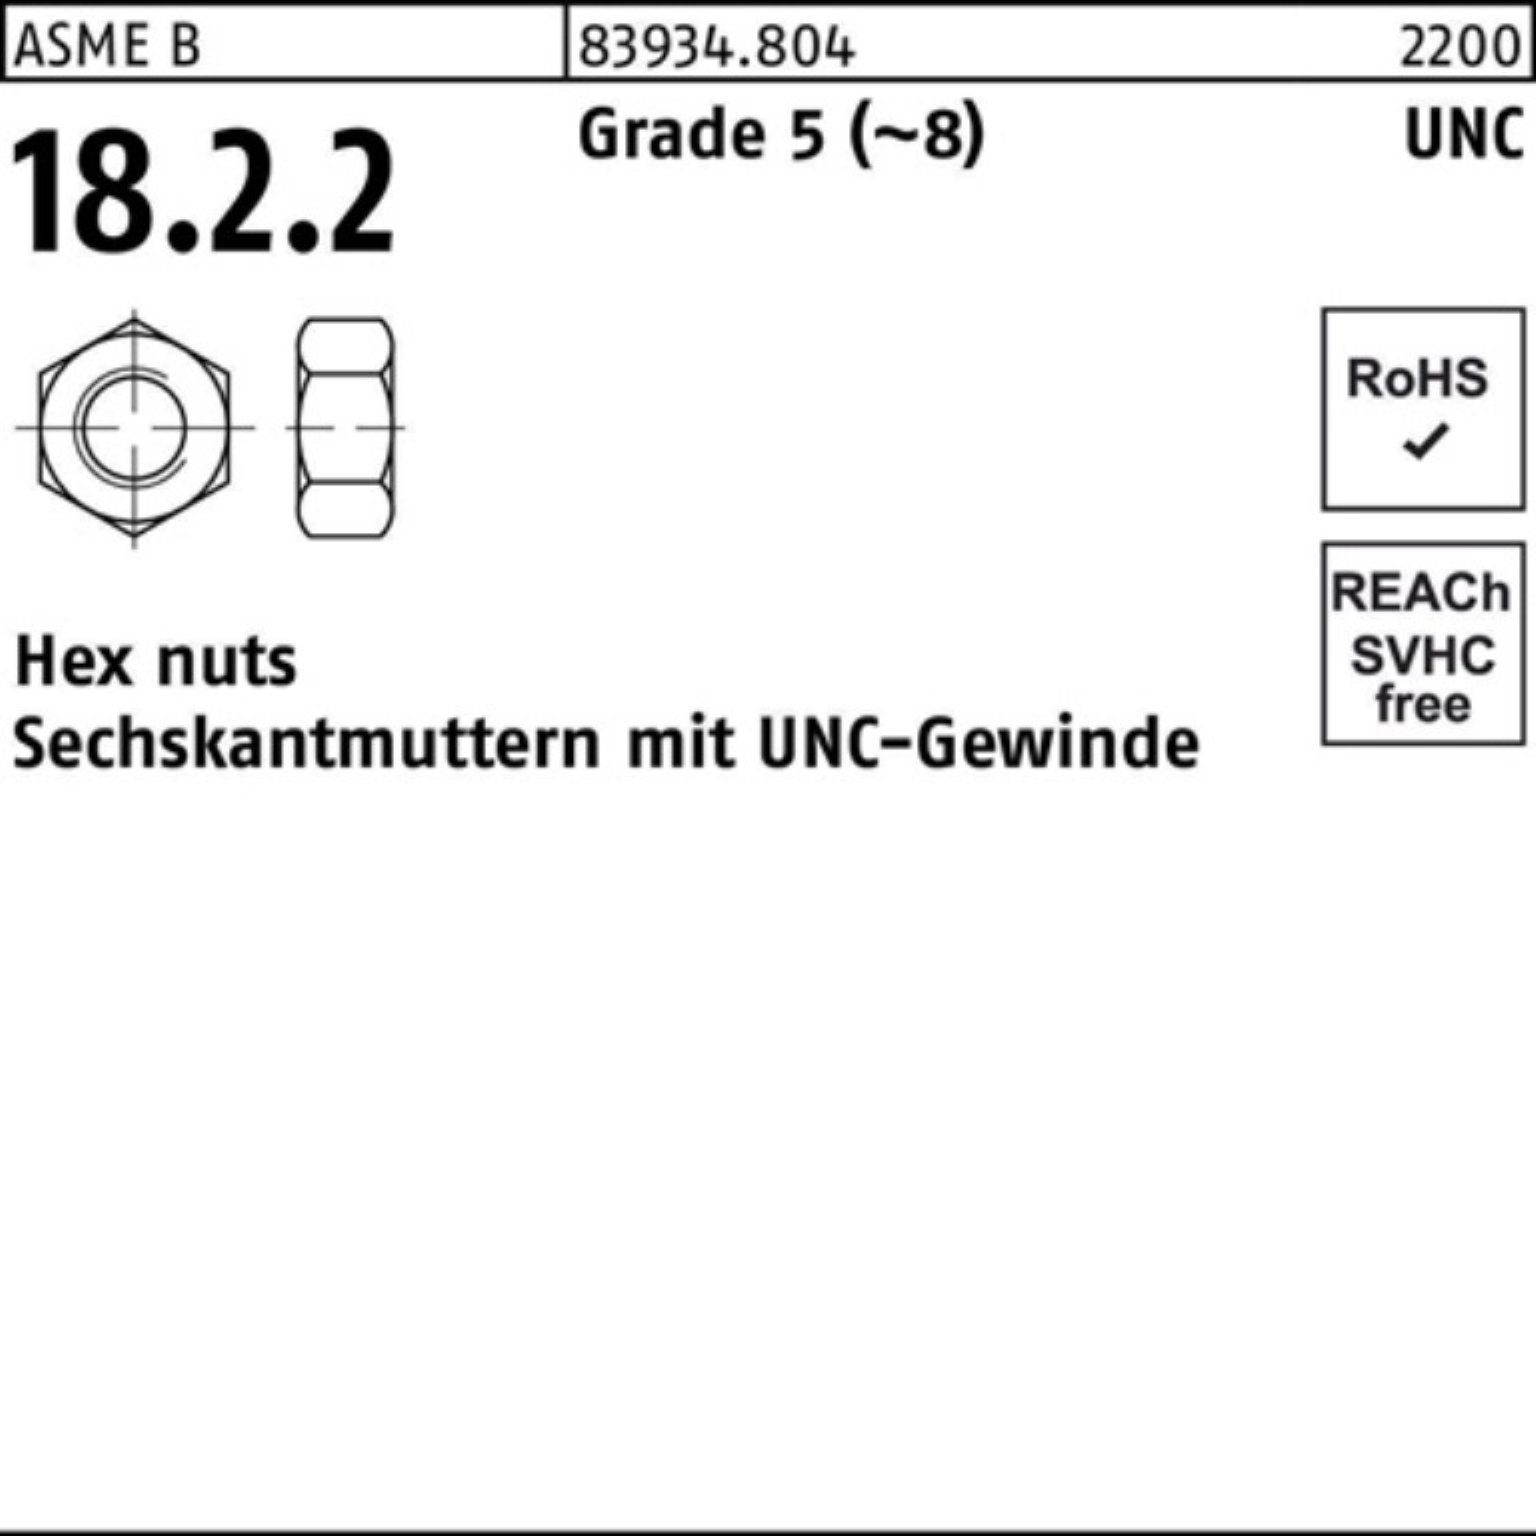 Reyher Muttern 100er Pack Sechskantmutter 1 UNC-Gewinde (8) Grade R 25 Stüc 83934 5